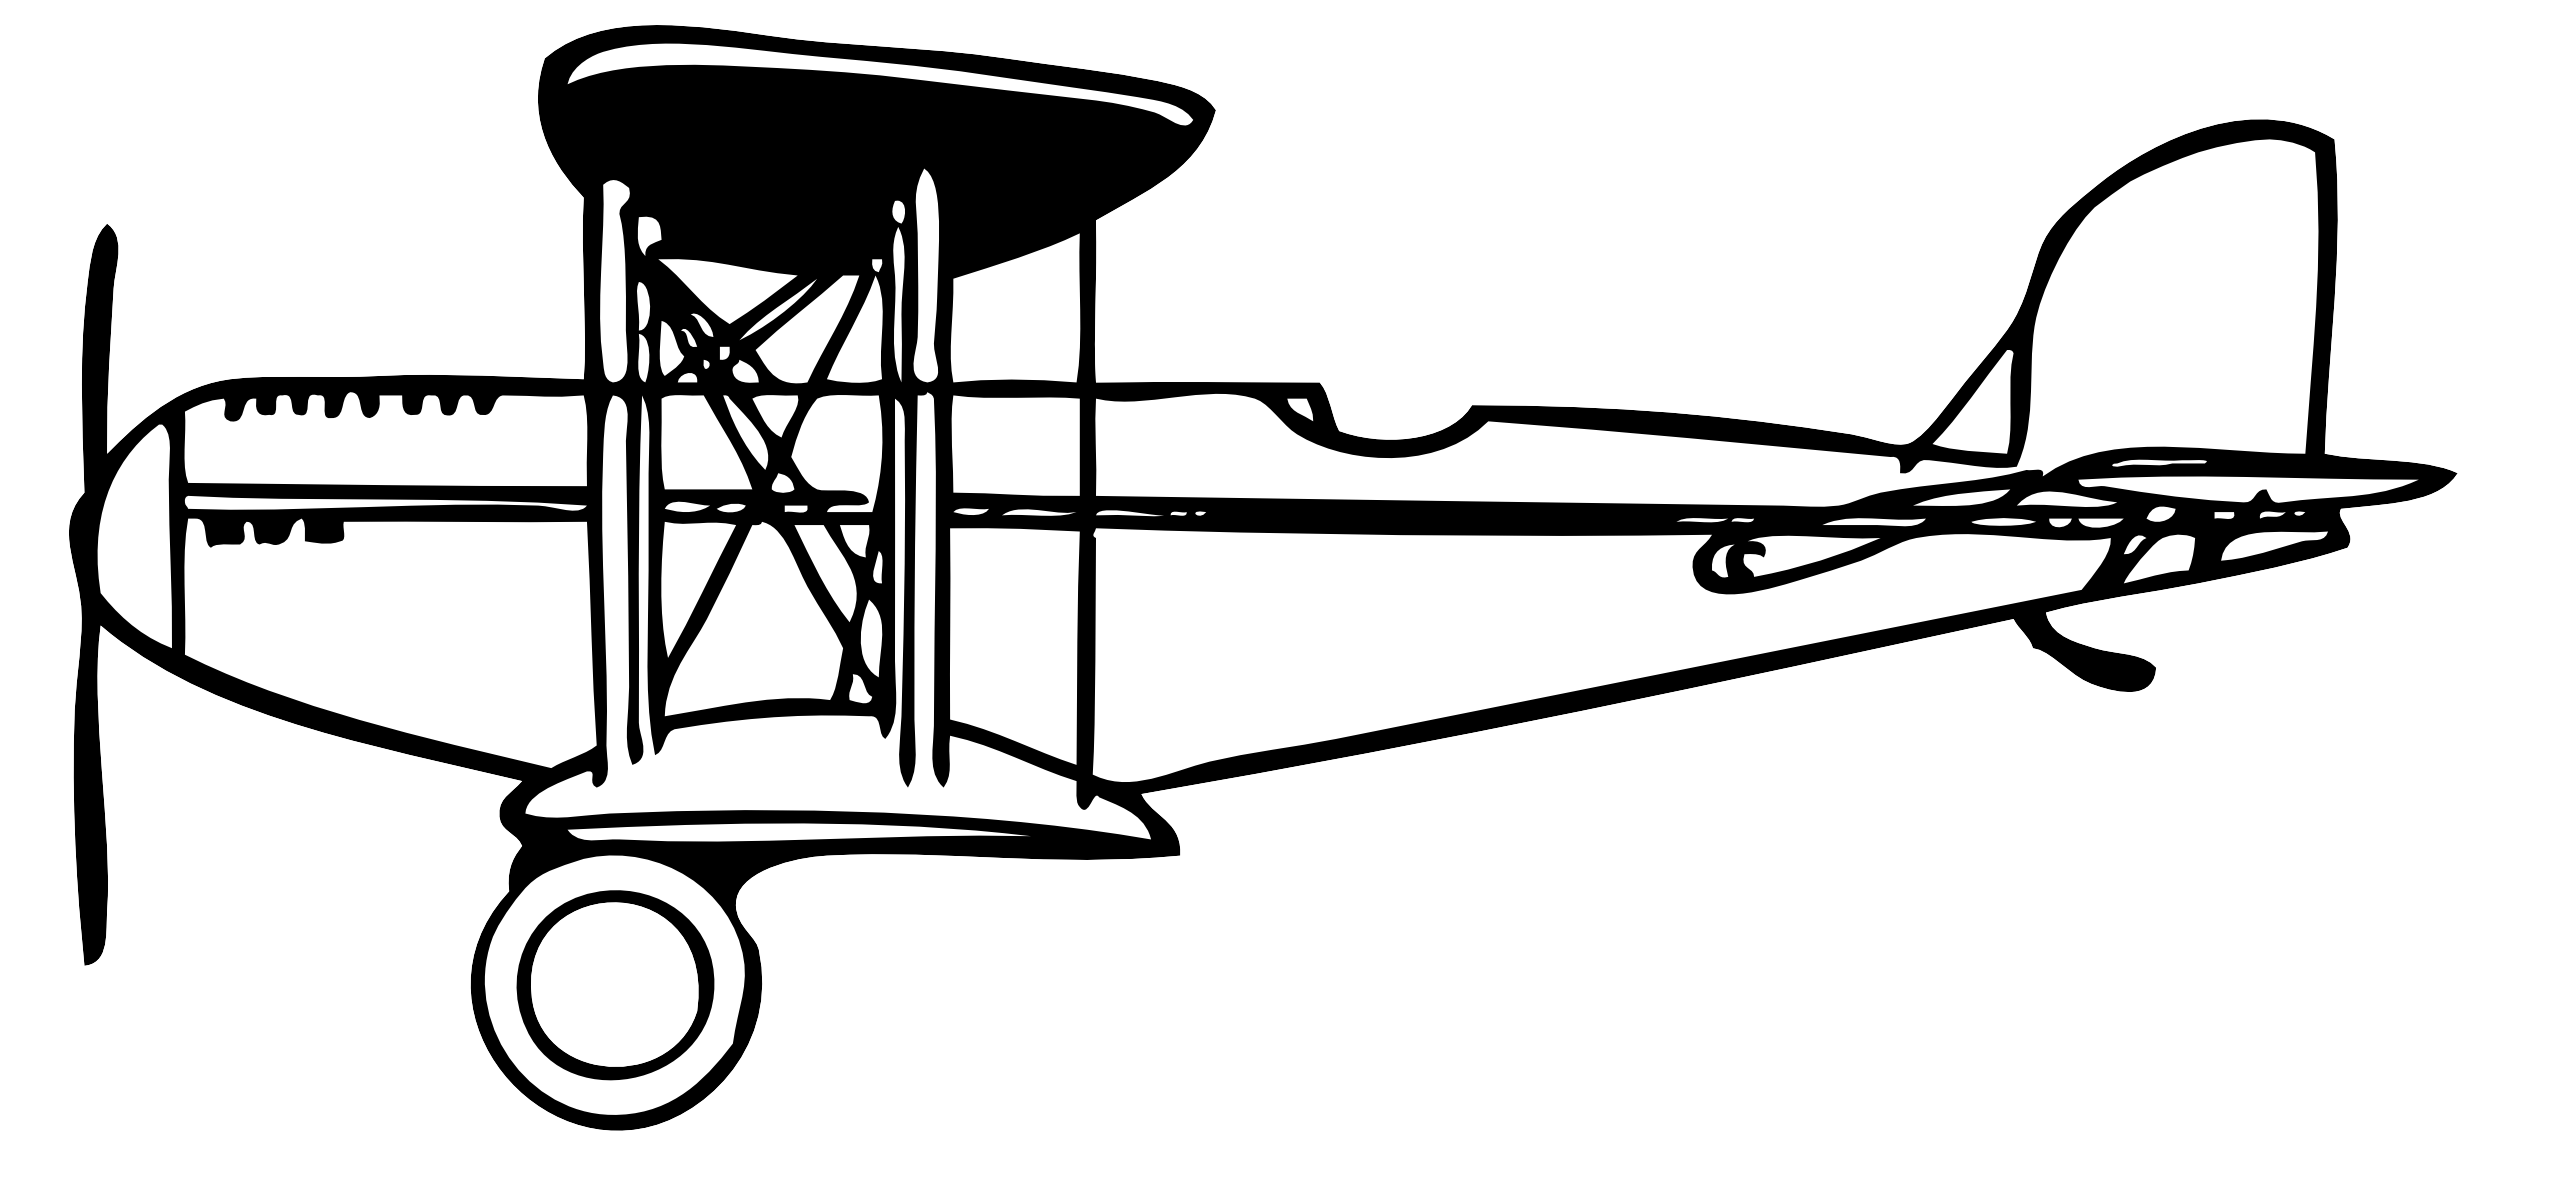 Biplane Clip Art